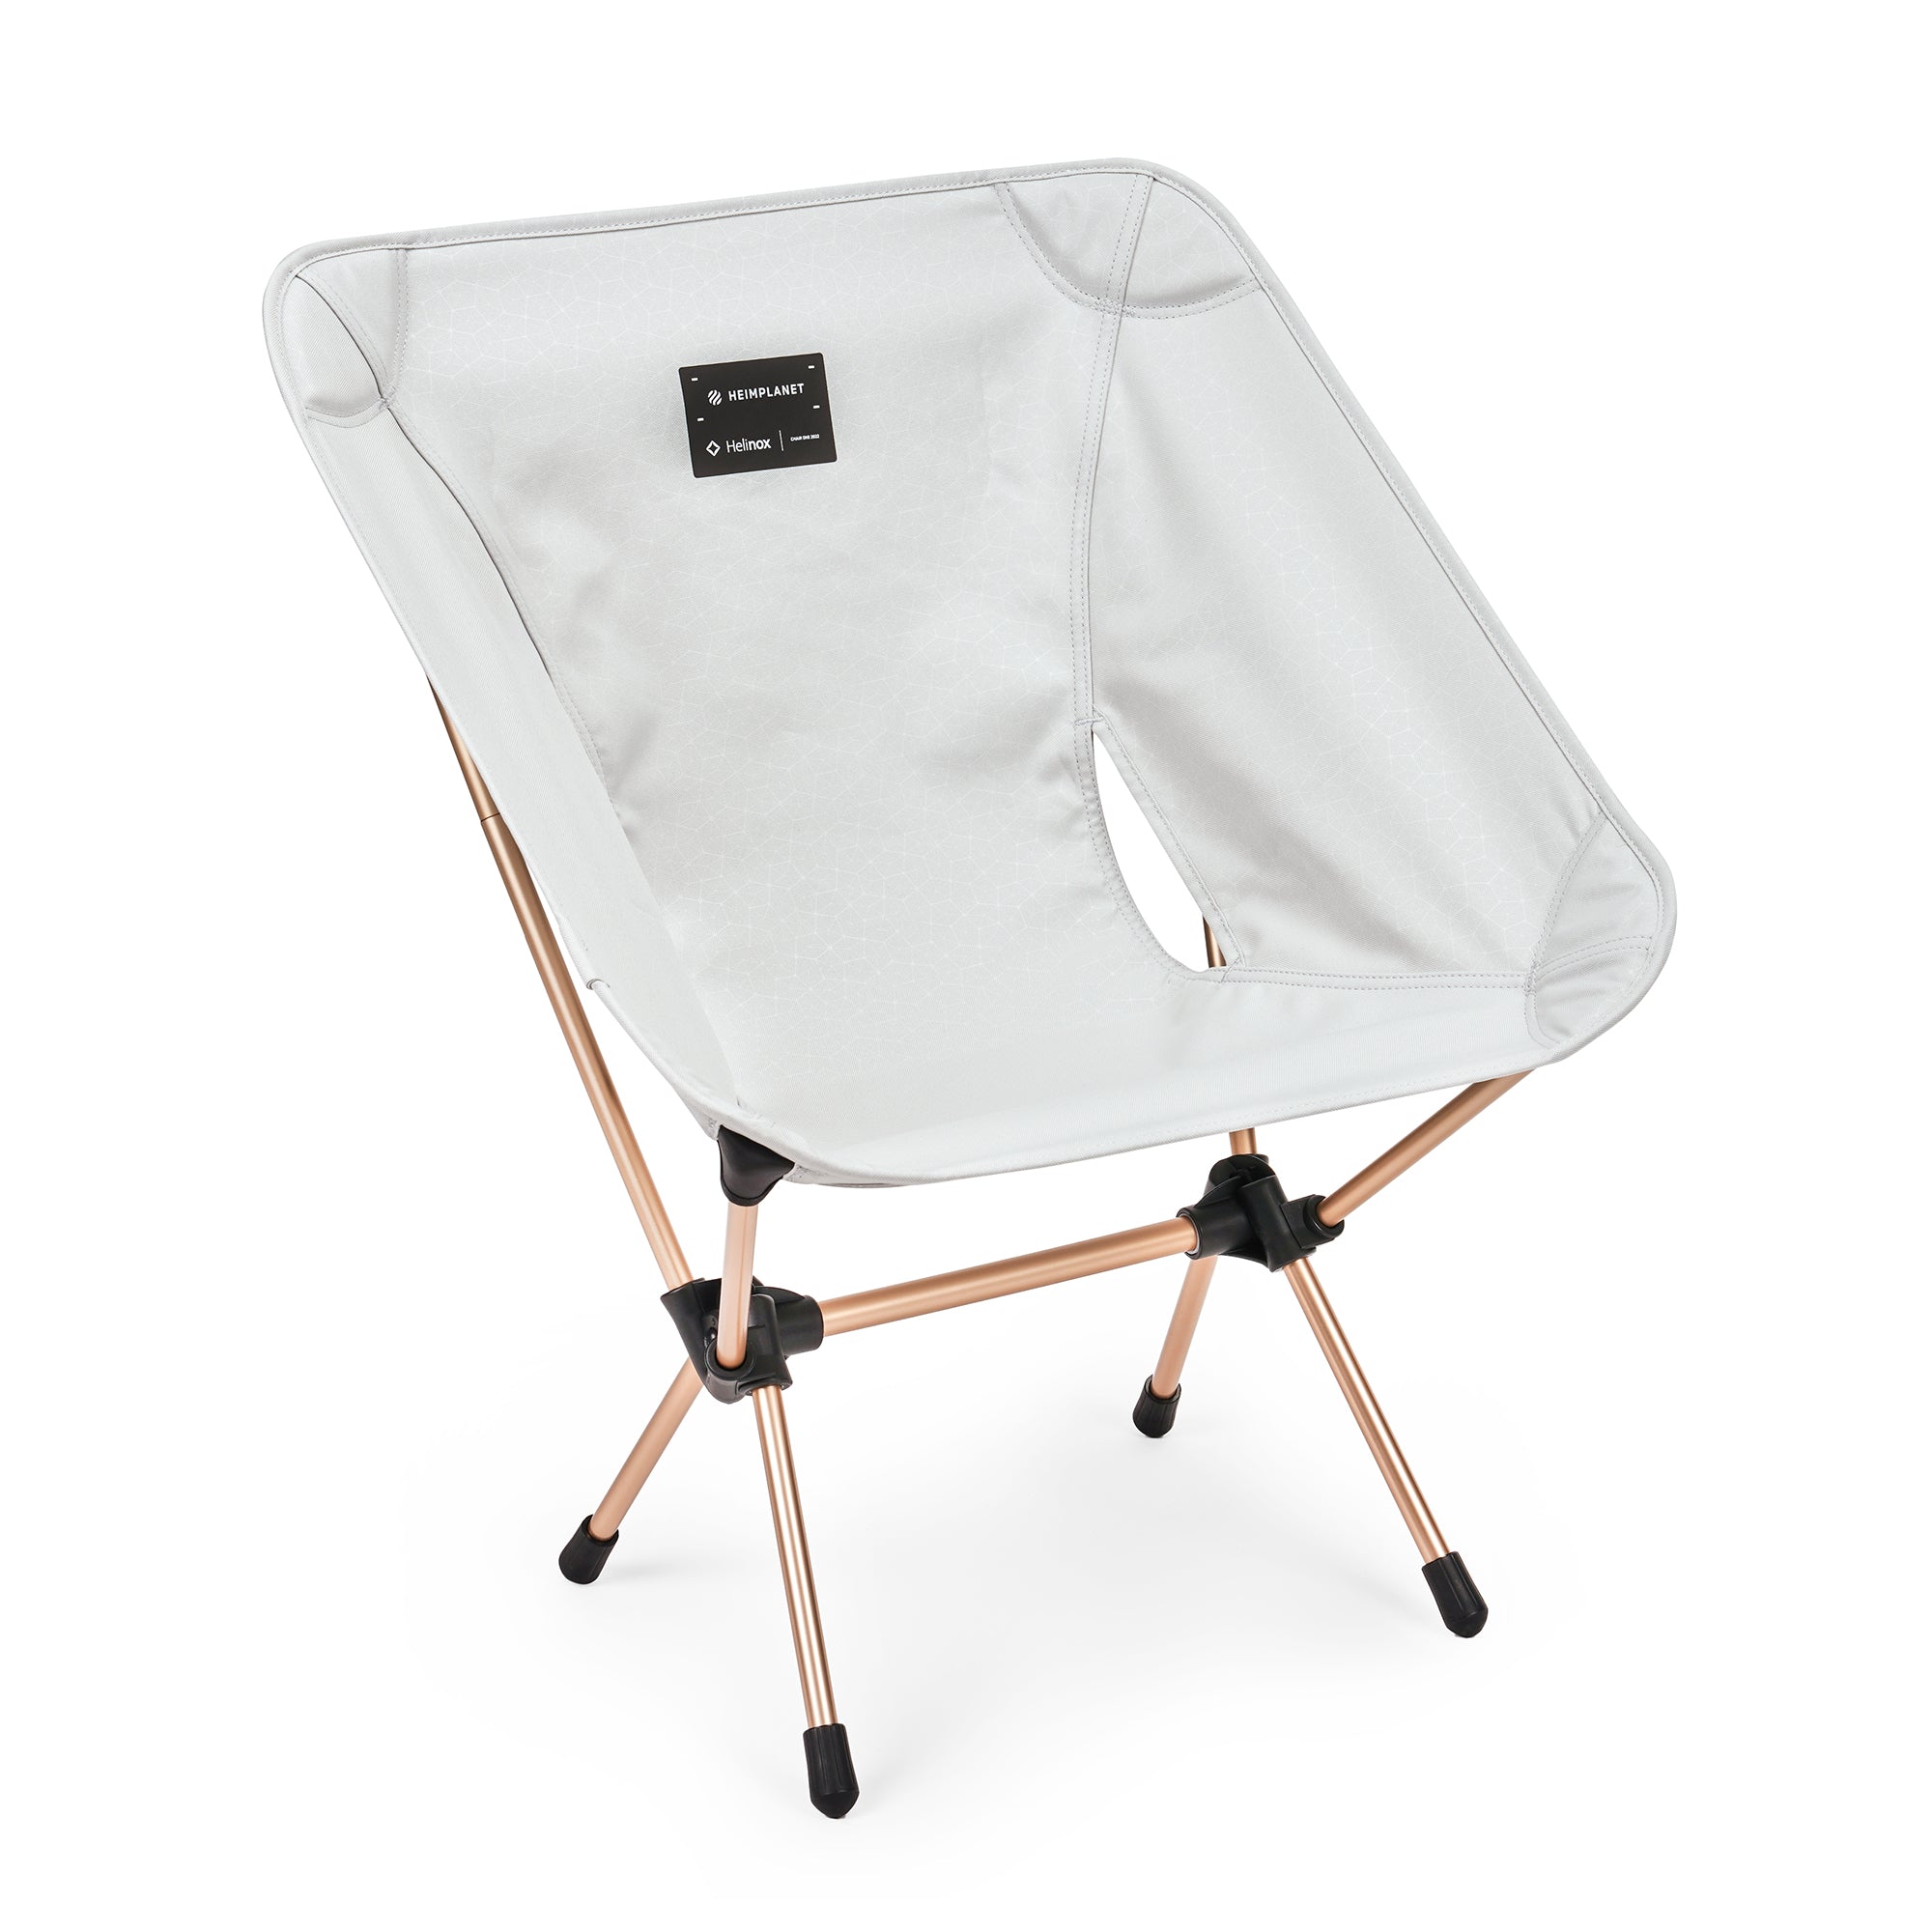 BTS x Helinox Chair アウトドア用品コラボ チェアワン